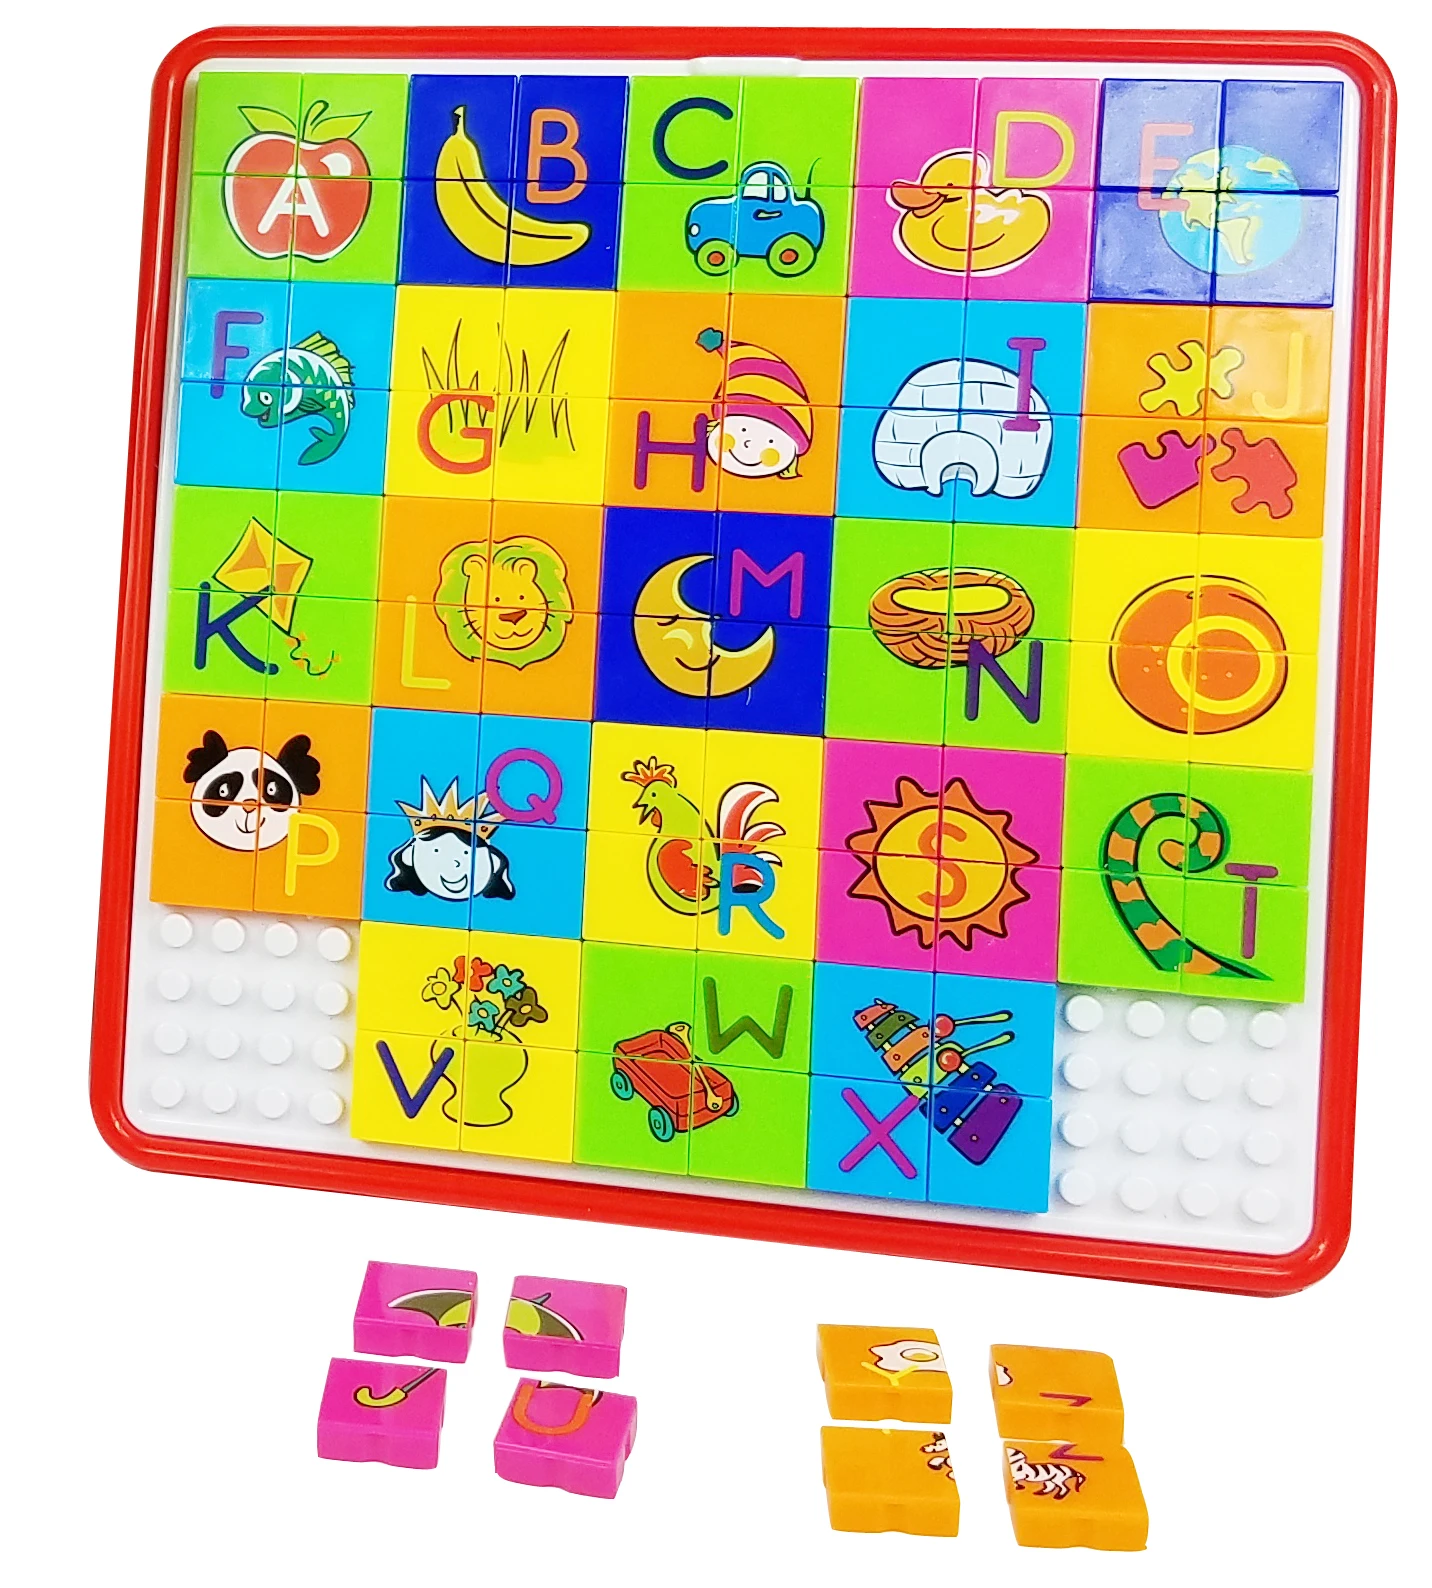 Anak Kreatif Blok Pendidikan Belajar Bahasa Inggris Huruf Permainan Puzzle Mainan Buy Belajar Pendidikan Teka Teki Permainan Puzzle Pendidikan Mainan Bahasa Inggris Surat Teka Teki Product On Alibaba Com